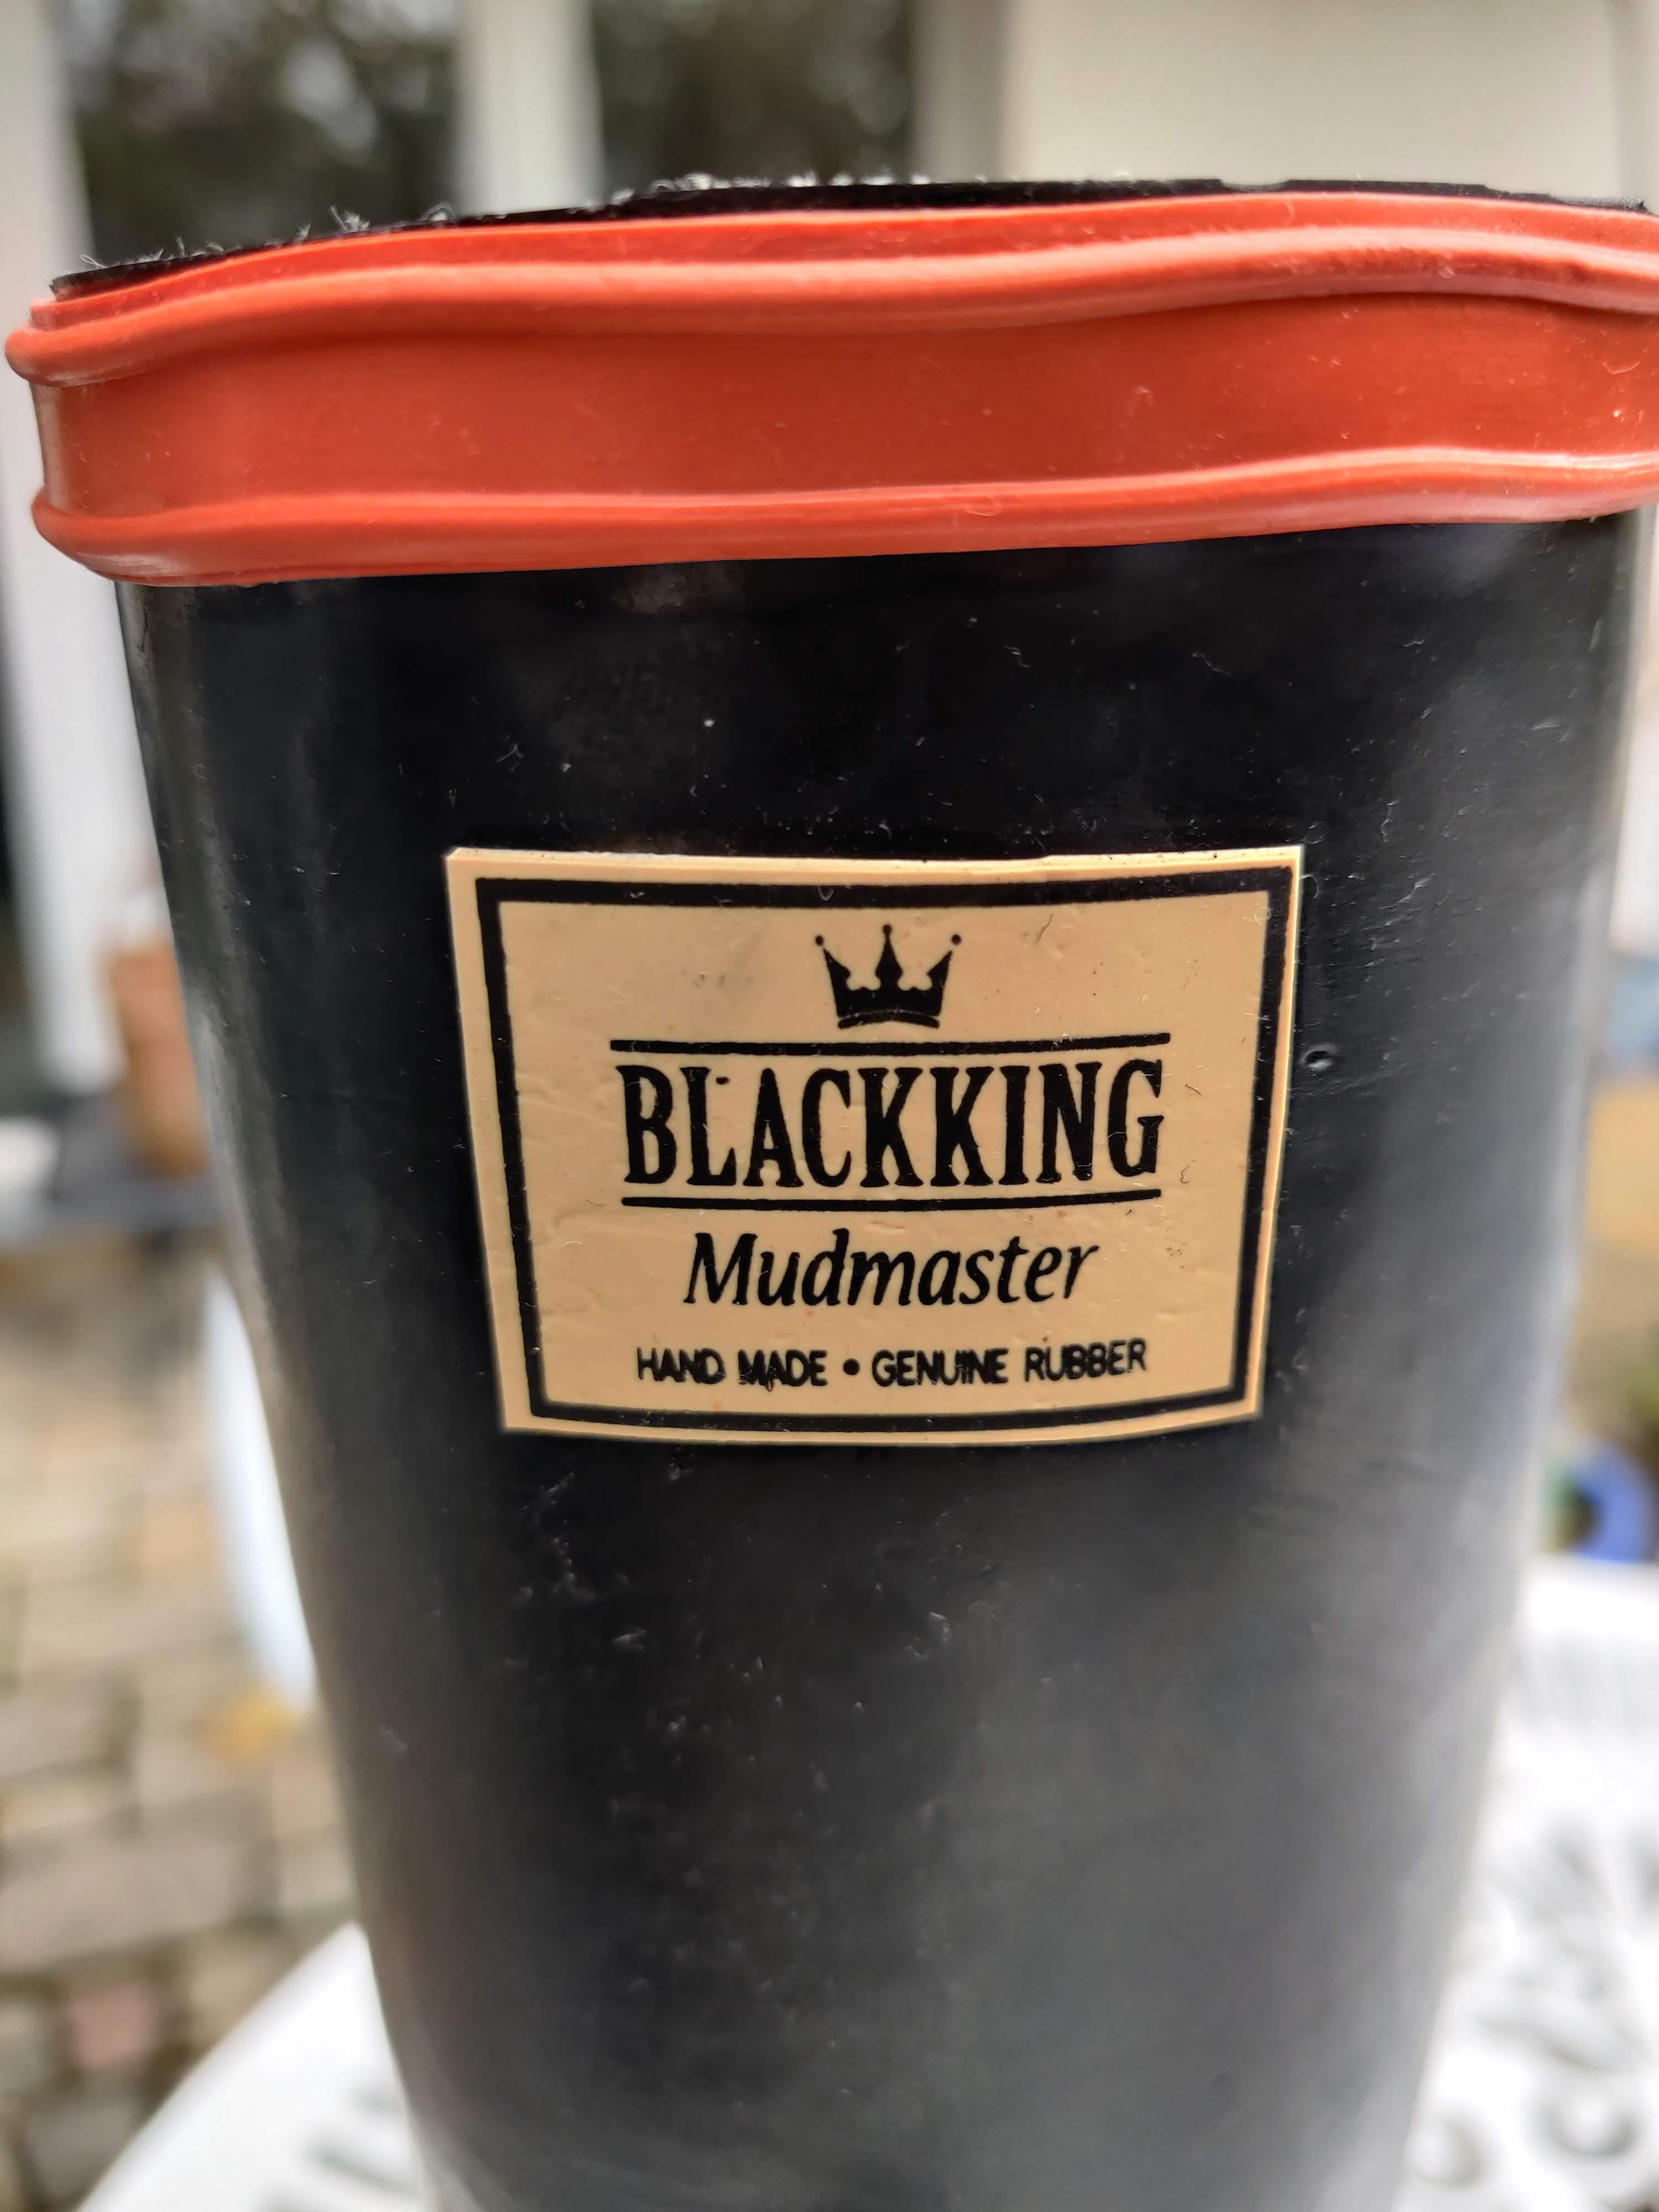 BLACKKING "Mudmaster Standard"